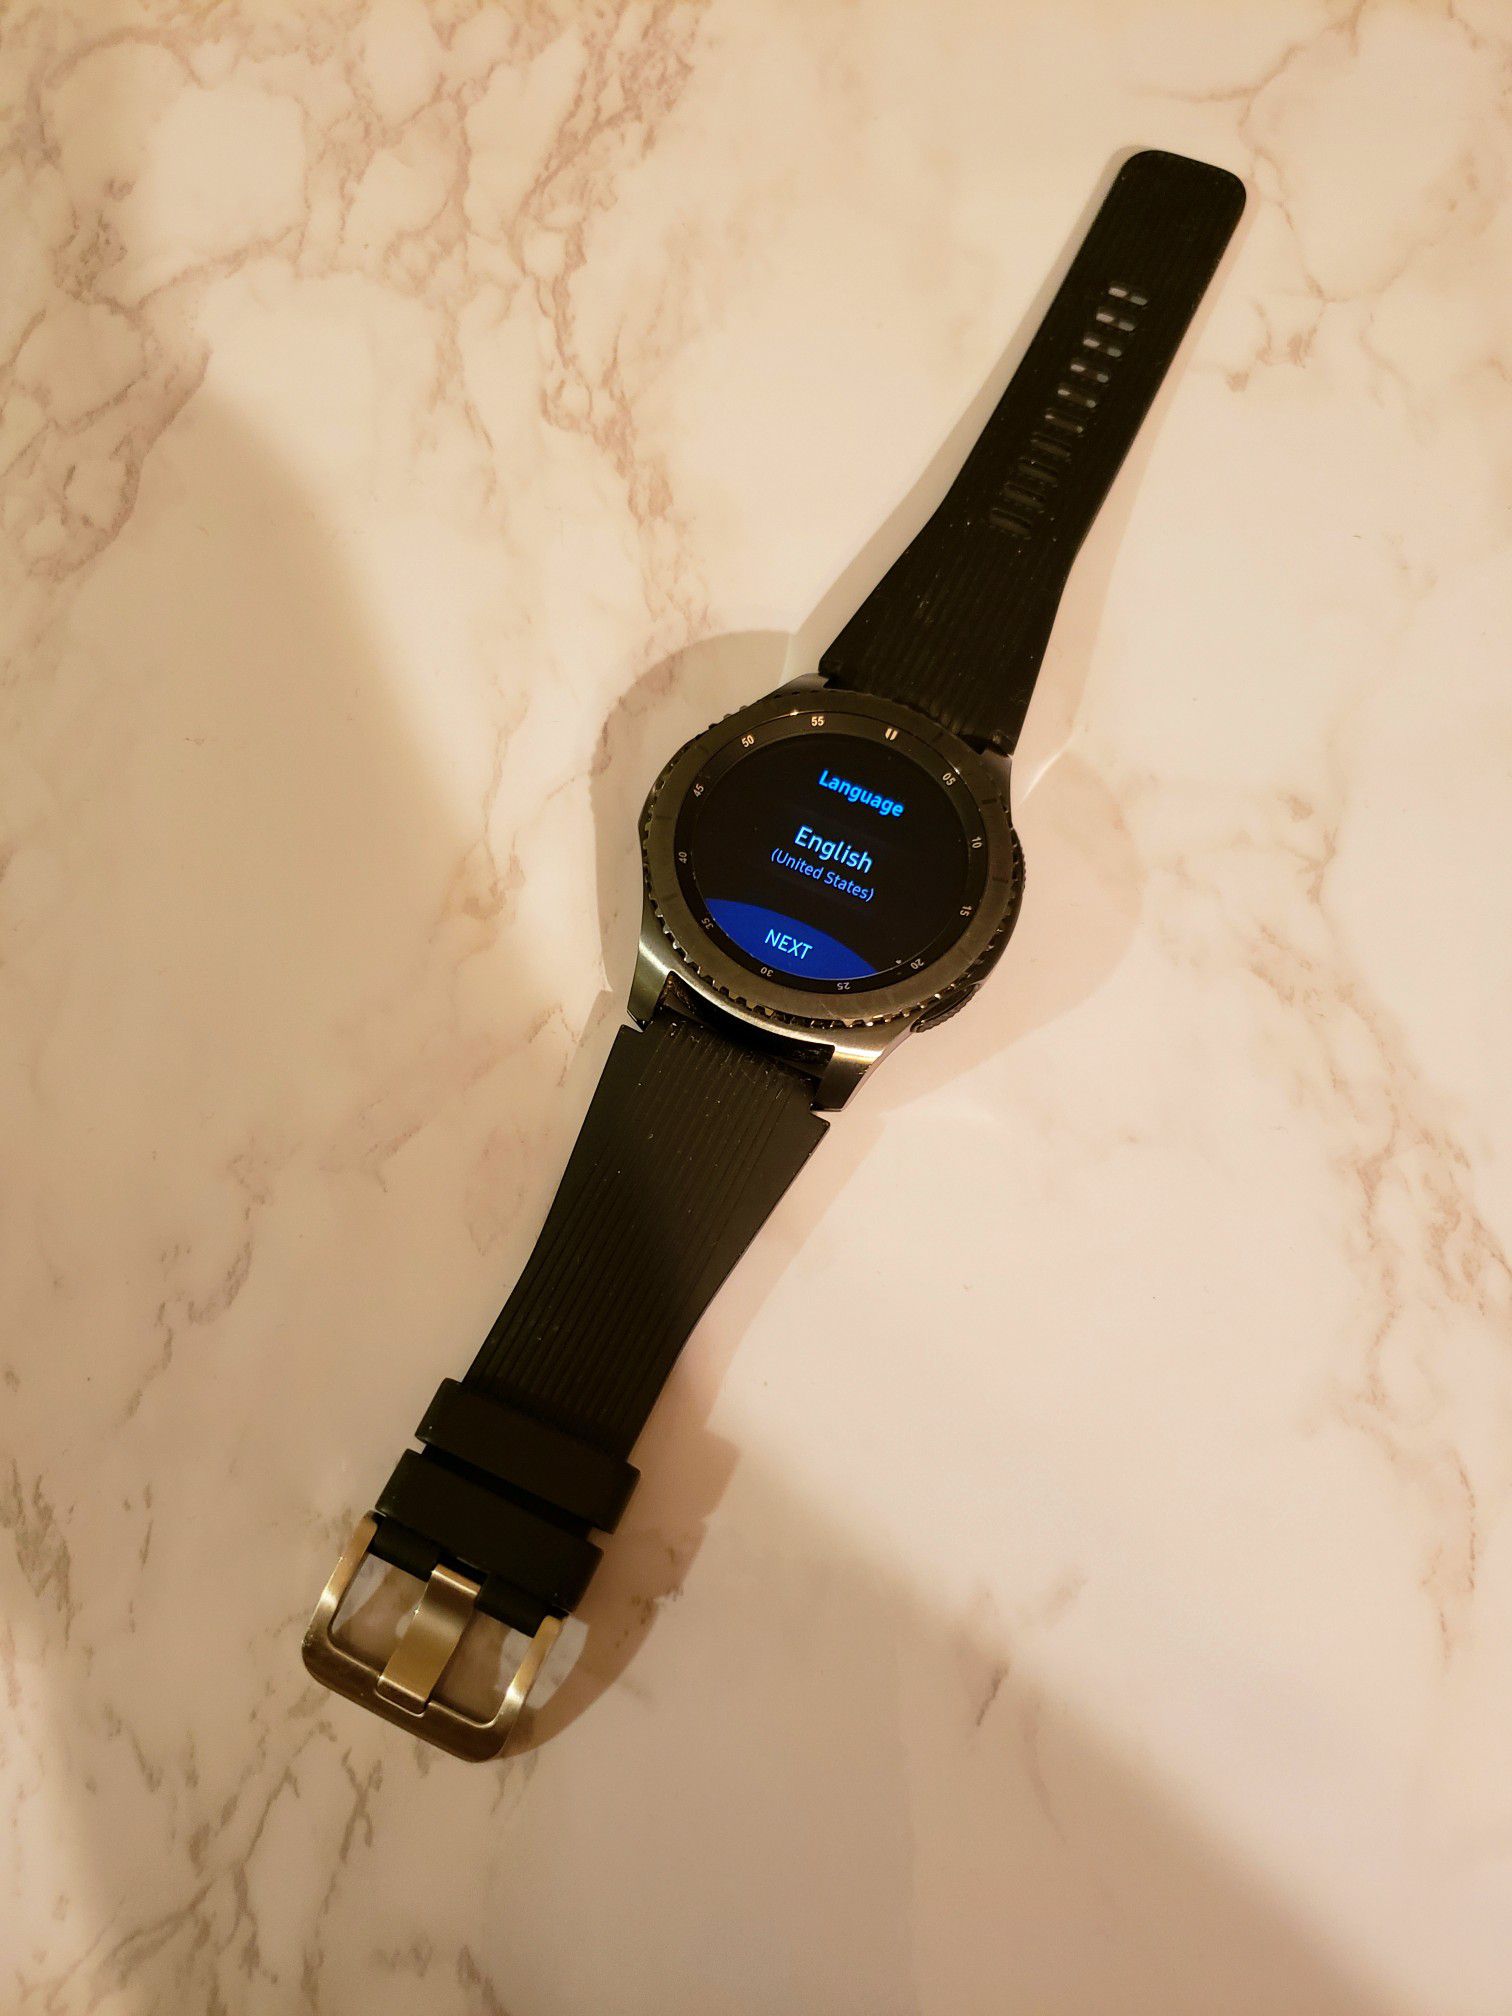 Samsung Galaxy smart watch